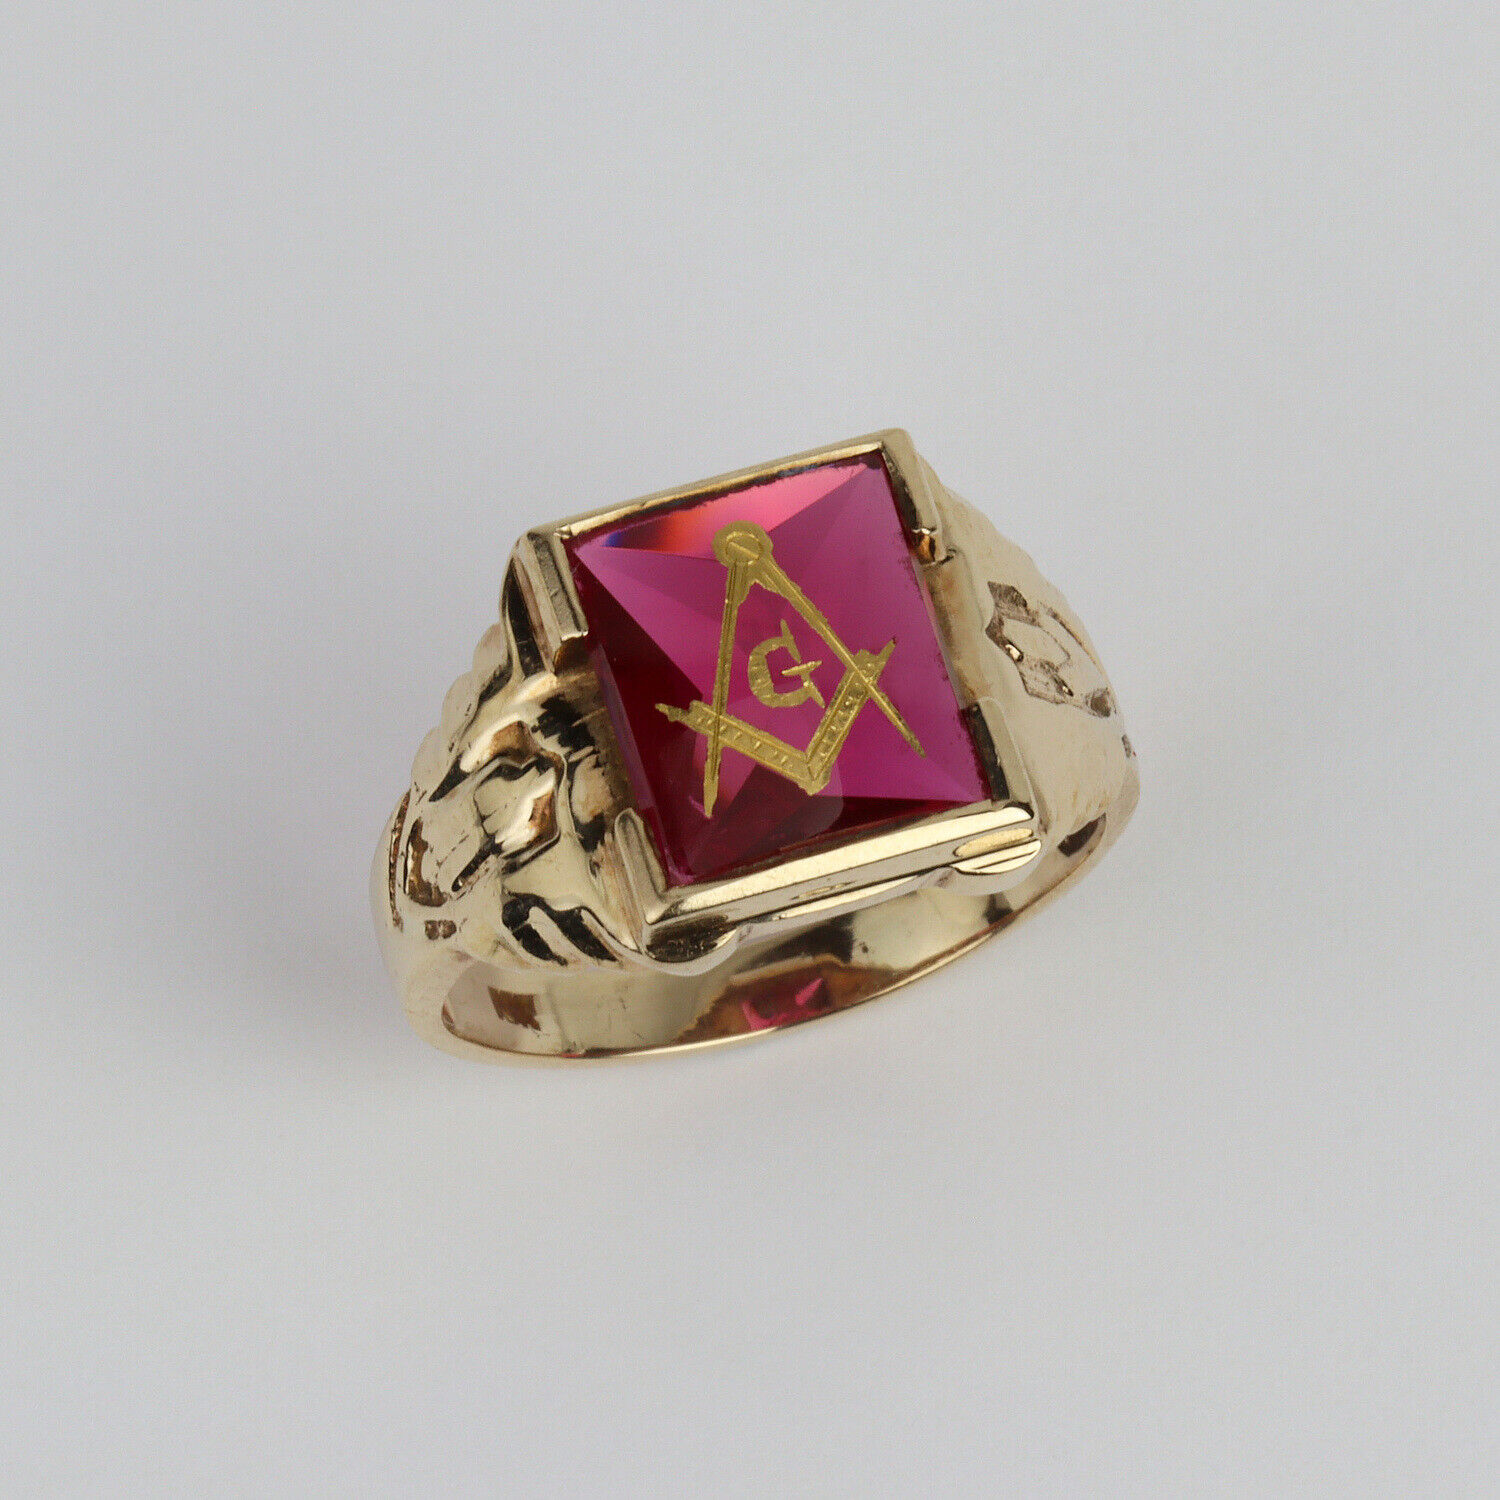 Vintage 10k Yellow Gold, Red Stone Men's Freemason Masonic Ring Size 10